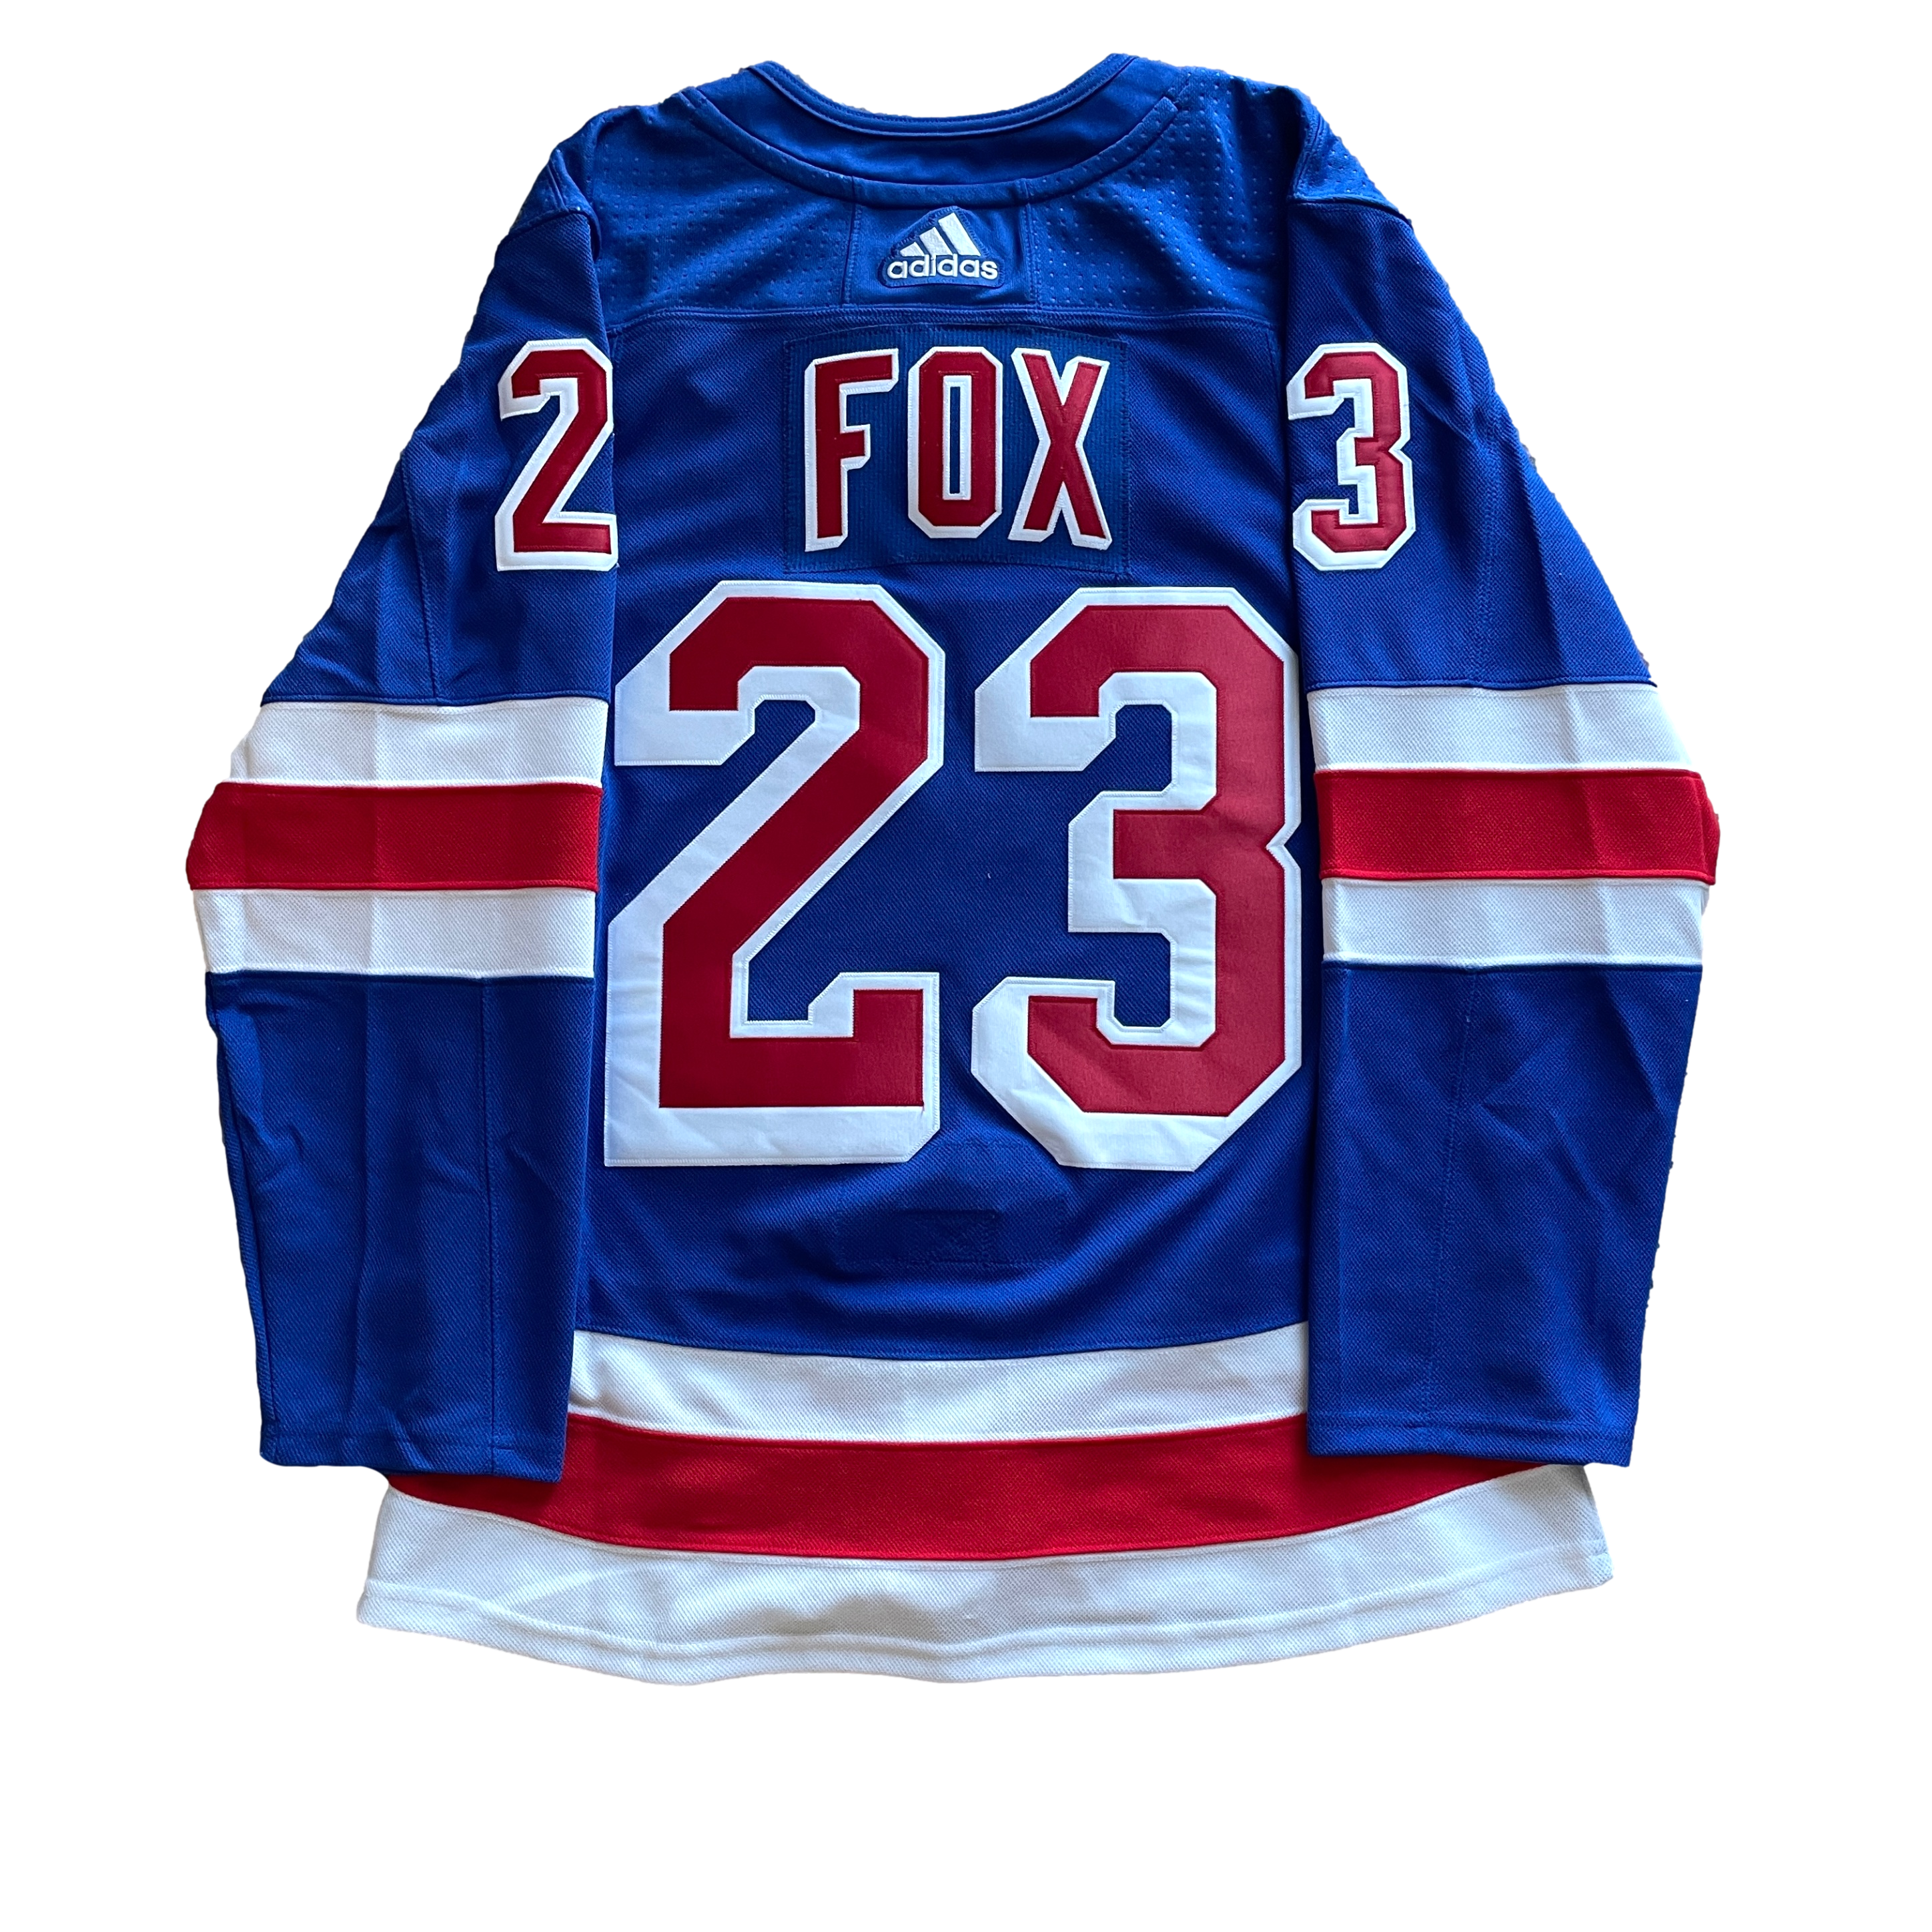 New York Rangers NHL Hockey Jersey (44)